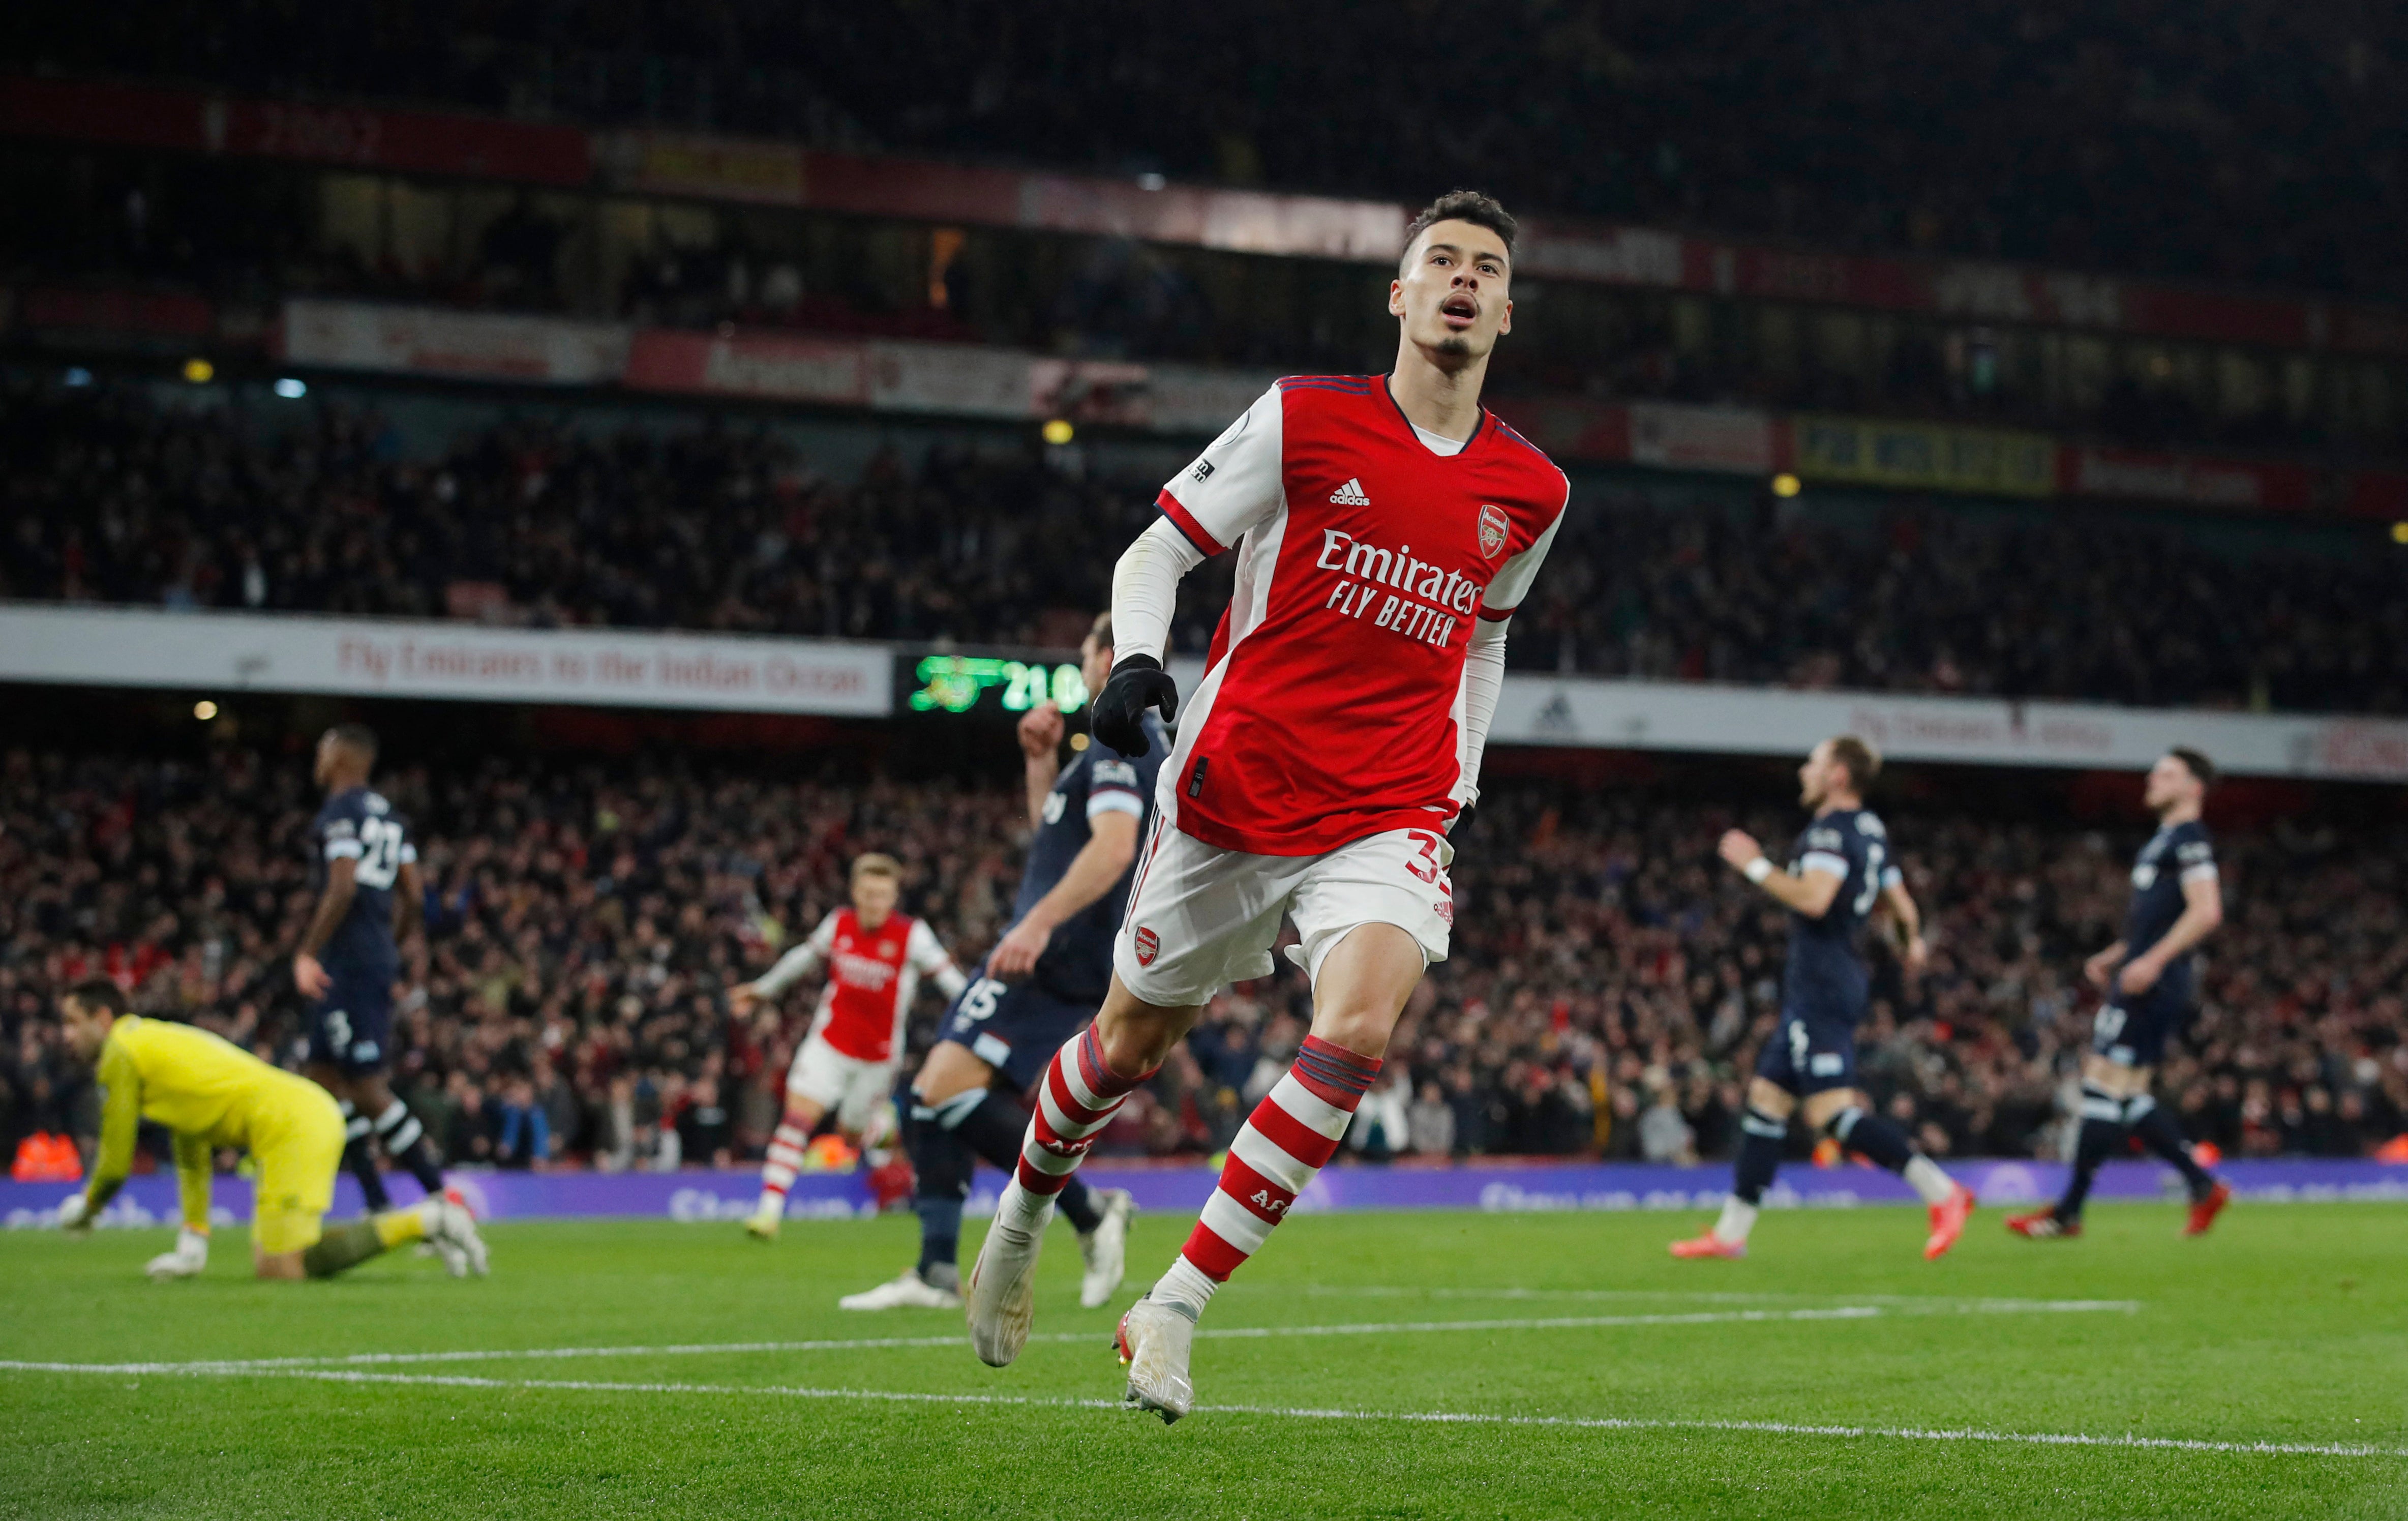 Arsenal's Gabriel Martinelli celebrates scoring their first goal